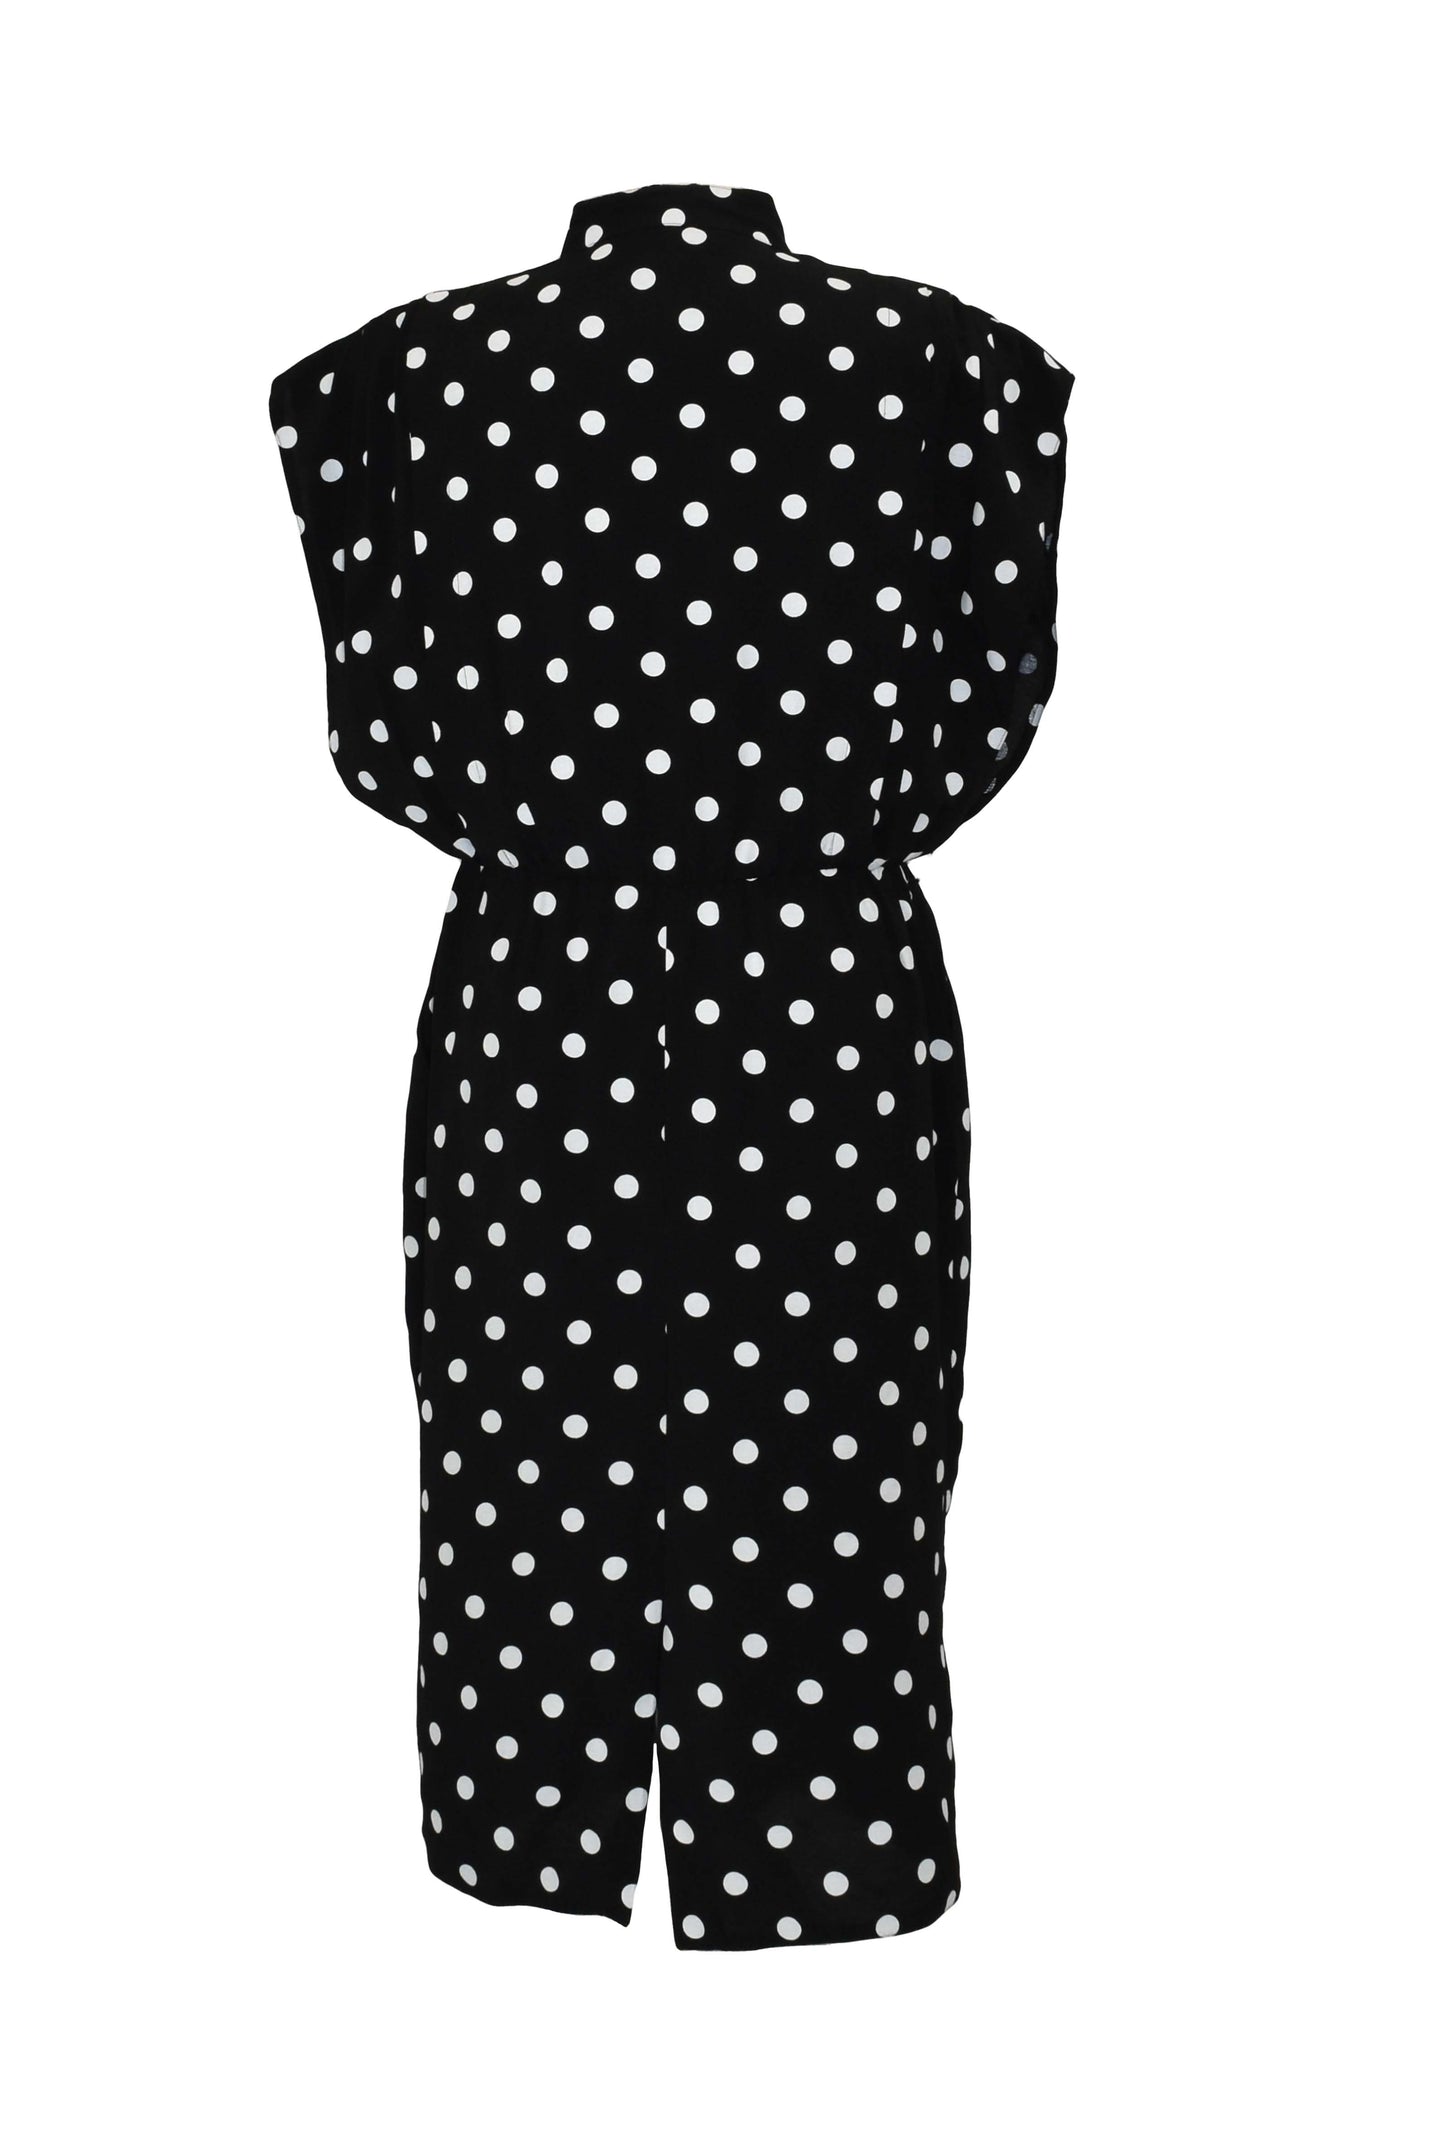 1980’s Black And White Polka Dot Dress | Vintage